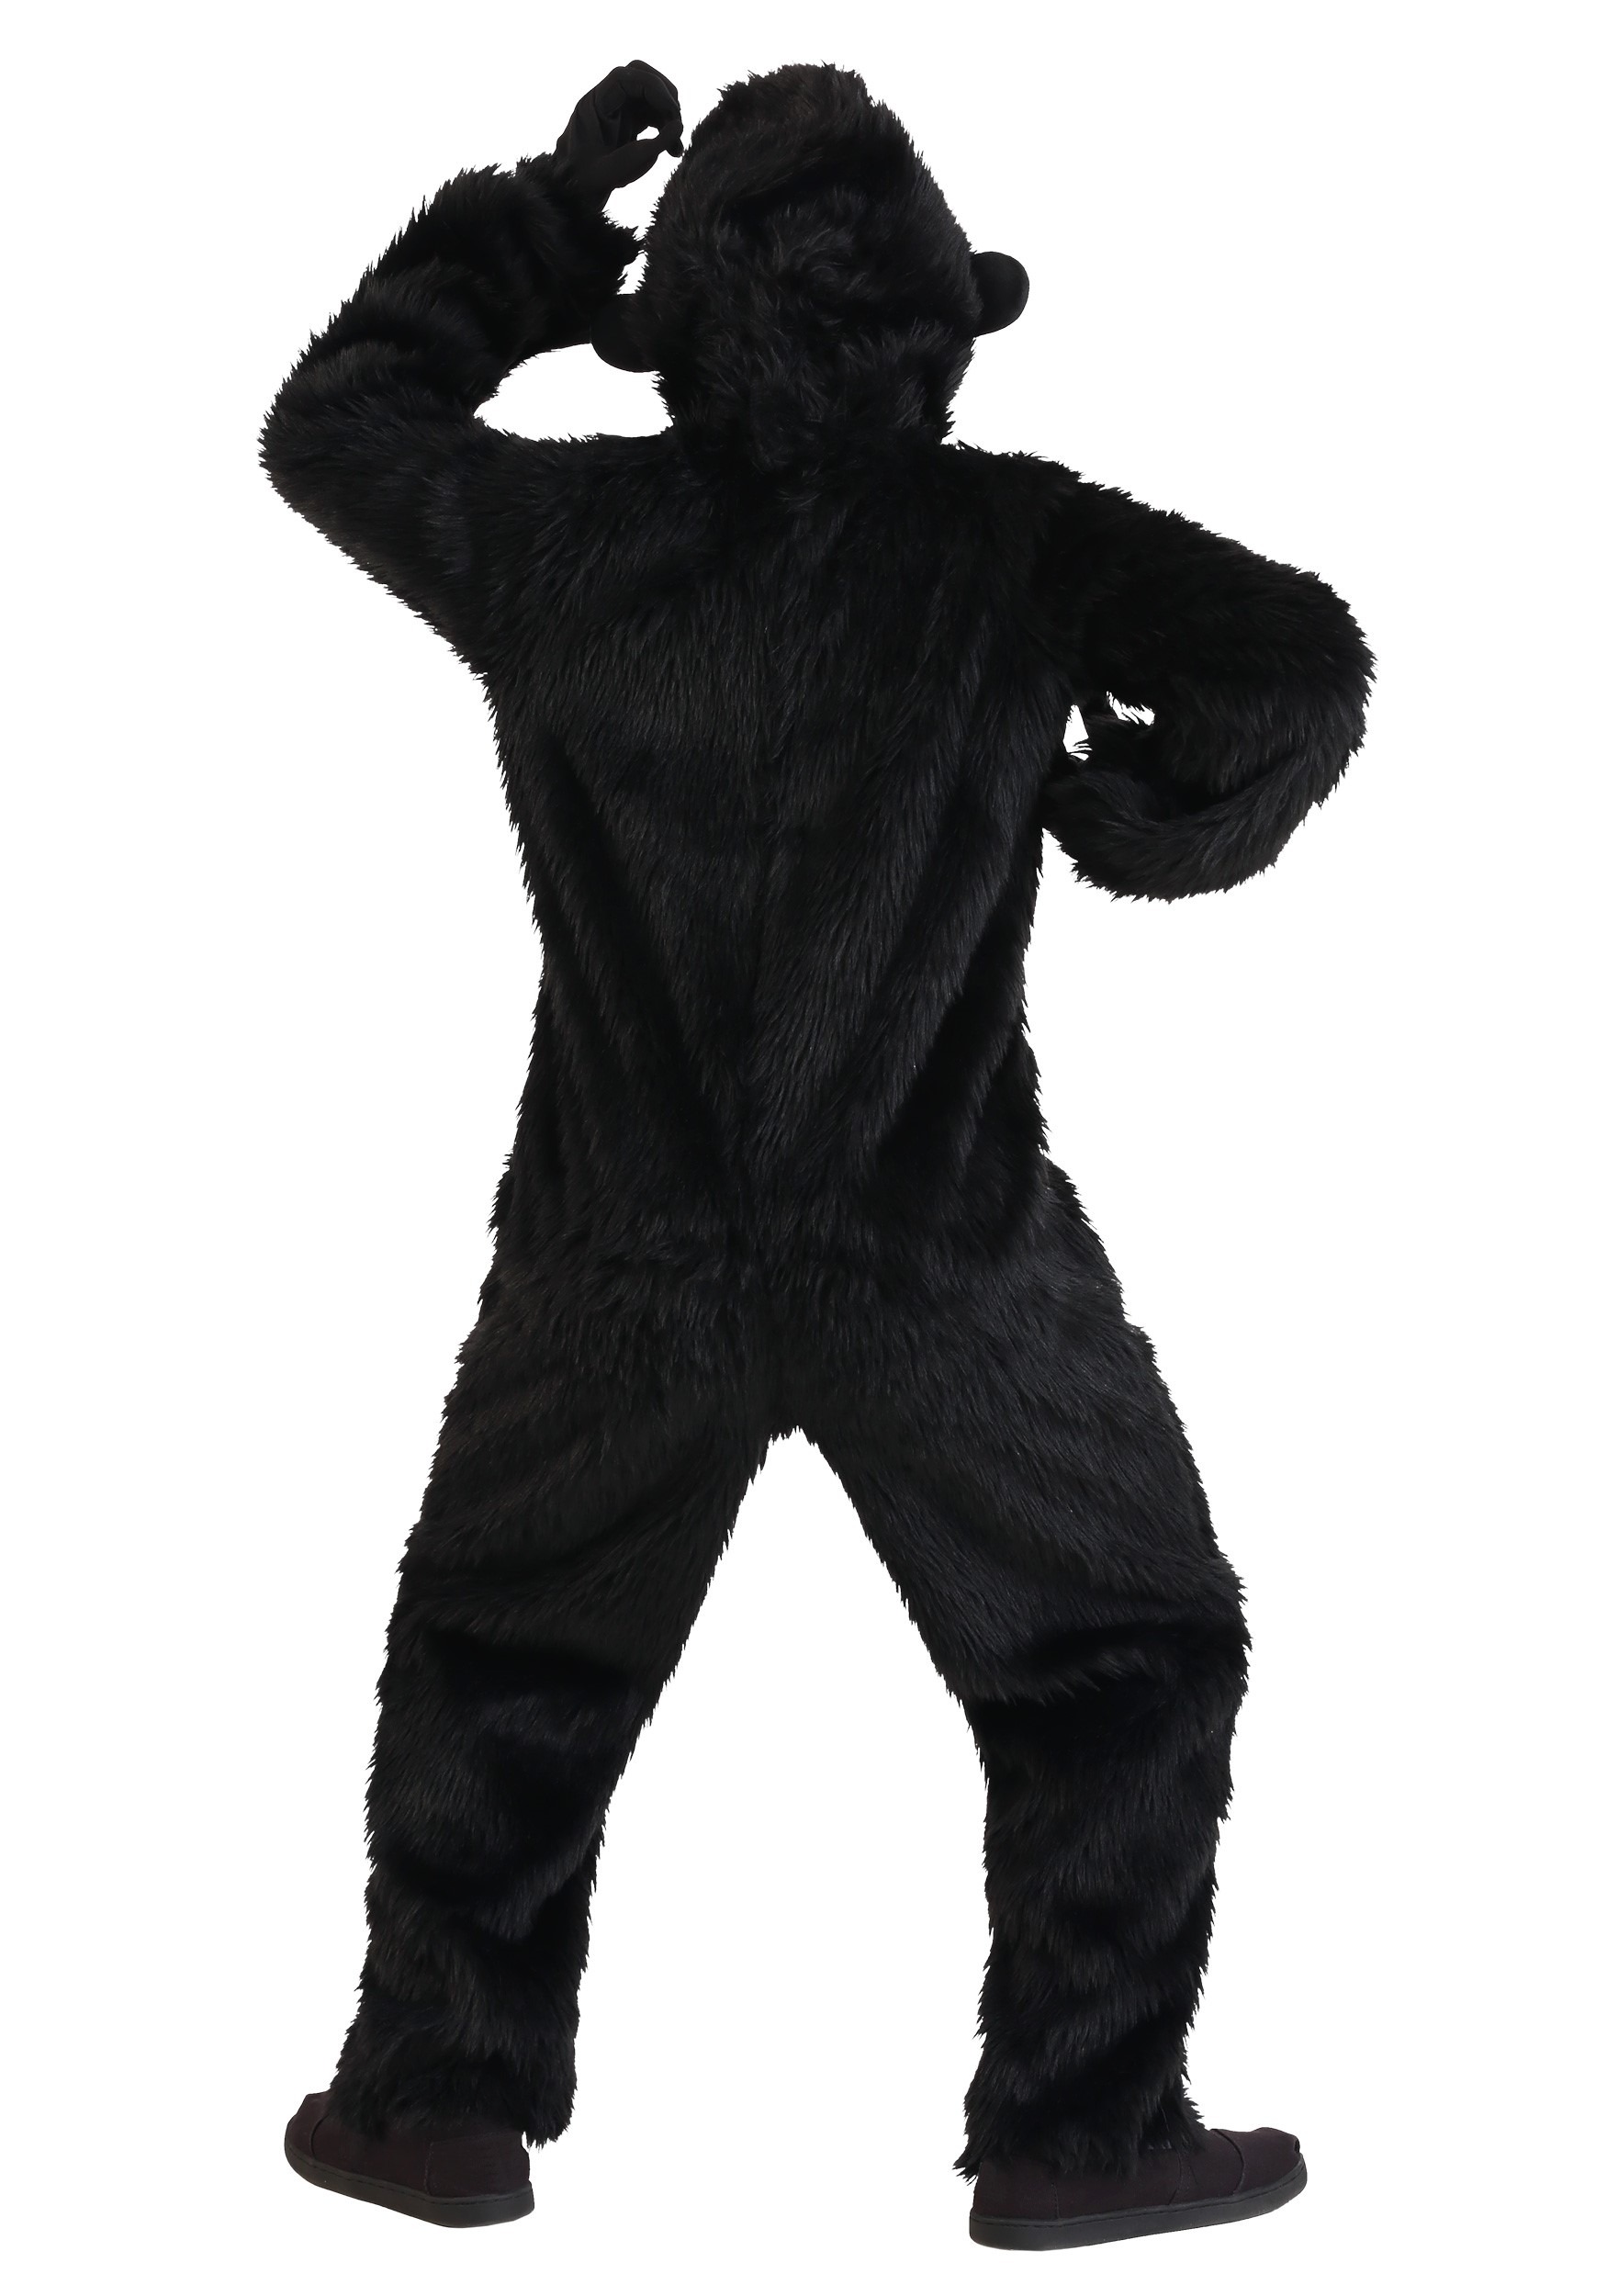 Childs Niños Childrens felpa esponjosa Gorila Fancy Dress Costume Outfit 1-5 años 